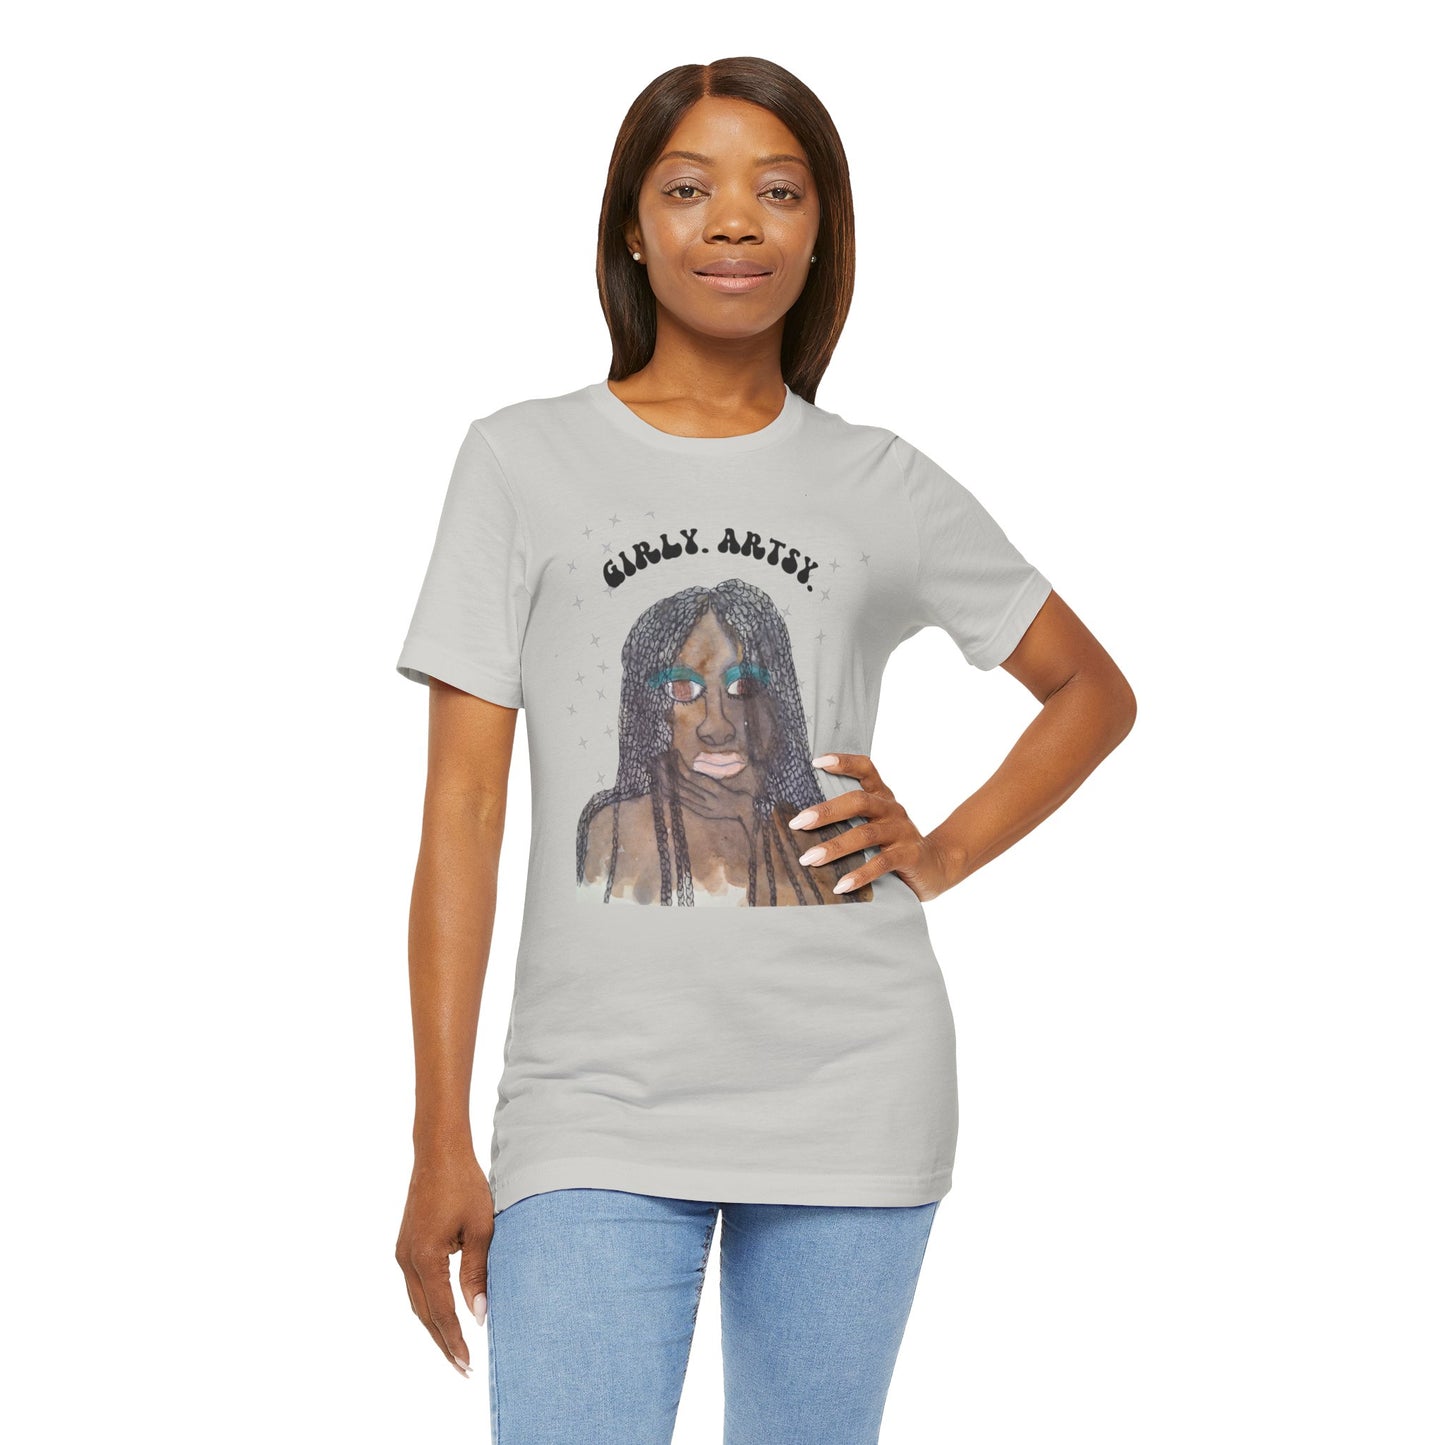 GIRLY. ARTSY. #1, Hand Painted Graphic T-shirt, Women's T-shirt, Black Art Graphic, Black Woman Graphic, Hand-painted Graphic, Retro, Gift for Her, Urban Fashion, Urban Streetstyle, Unisex Jersey Short Sleeve Tee